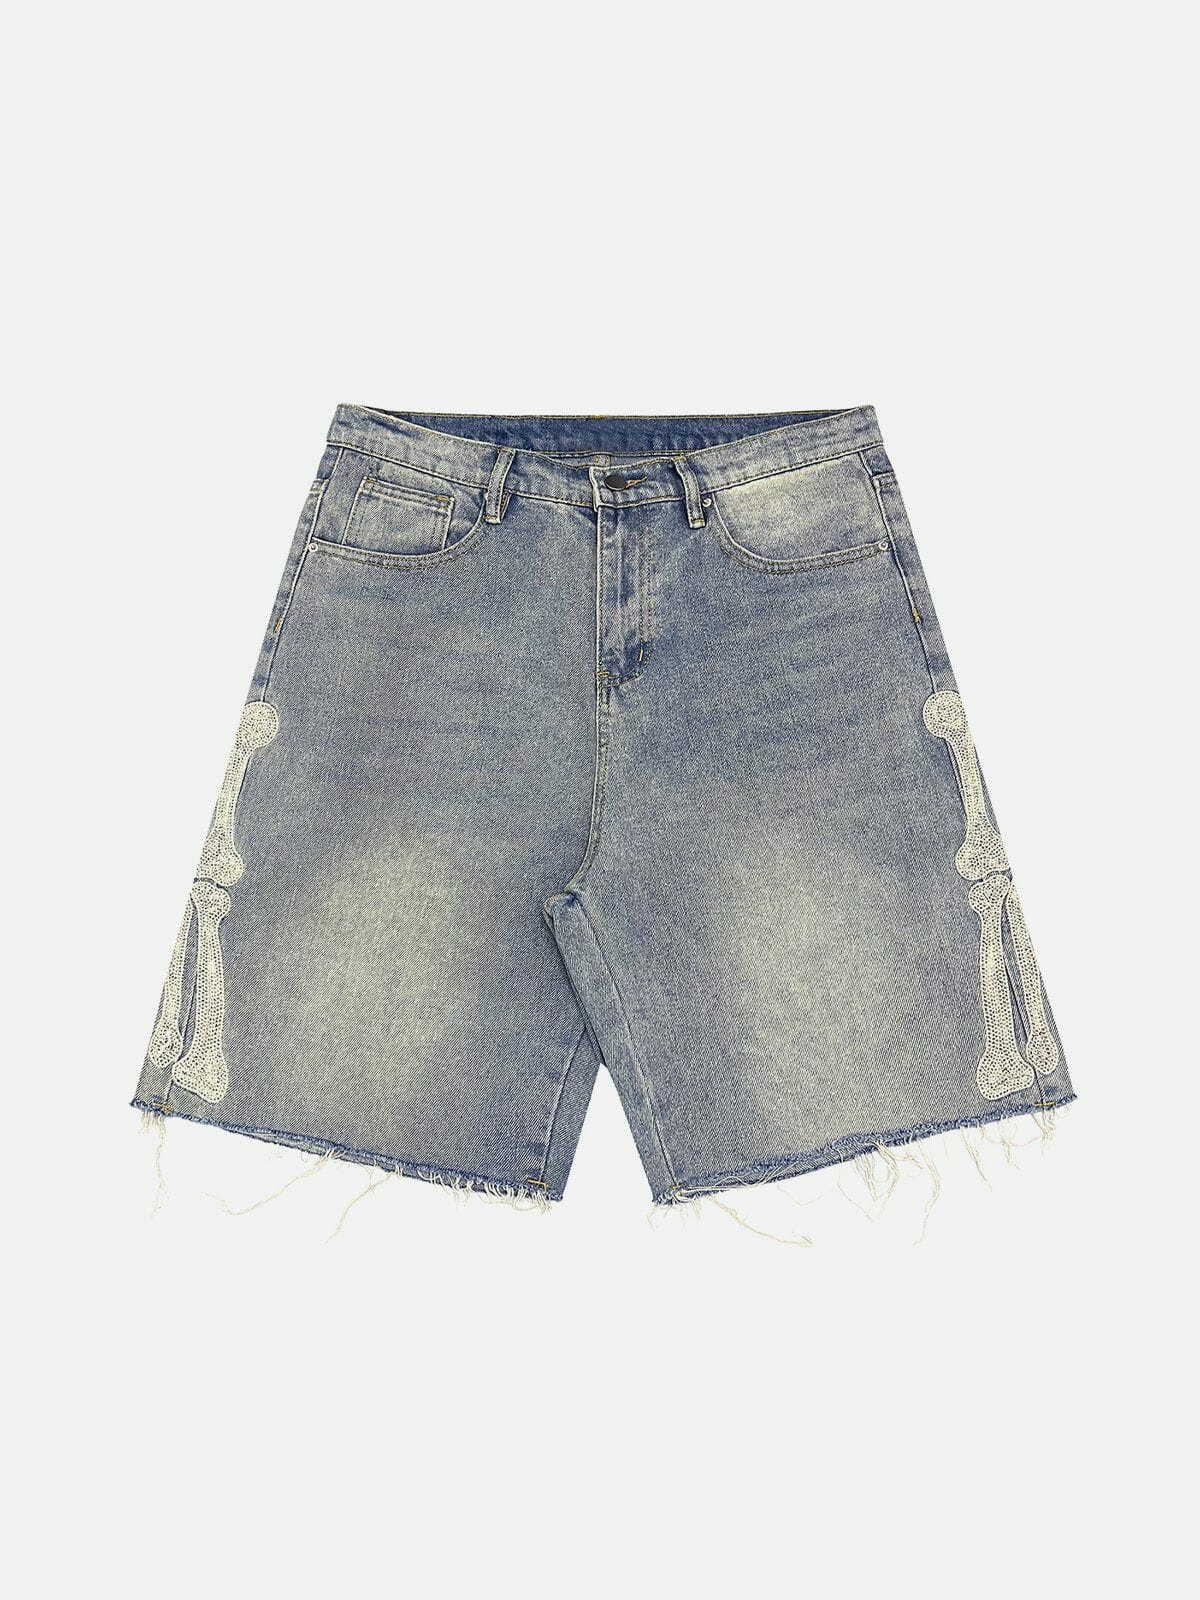 washed denim cutoff shorts edgy vintage grunge chic 1270